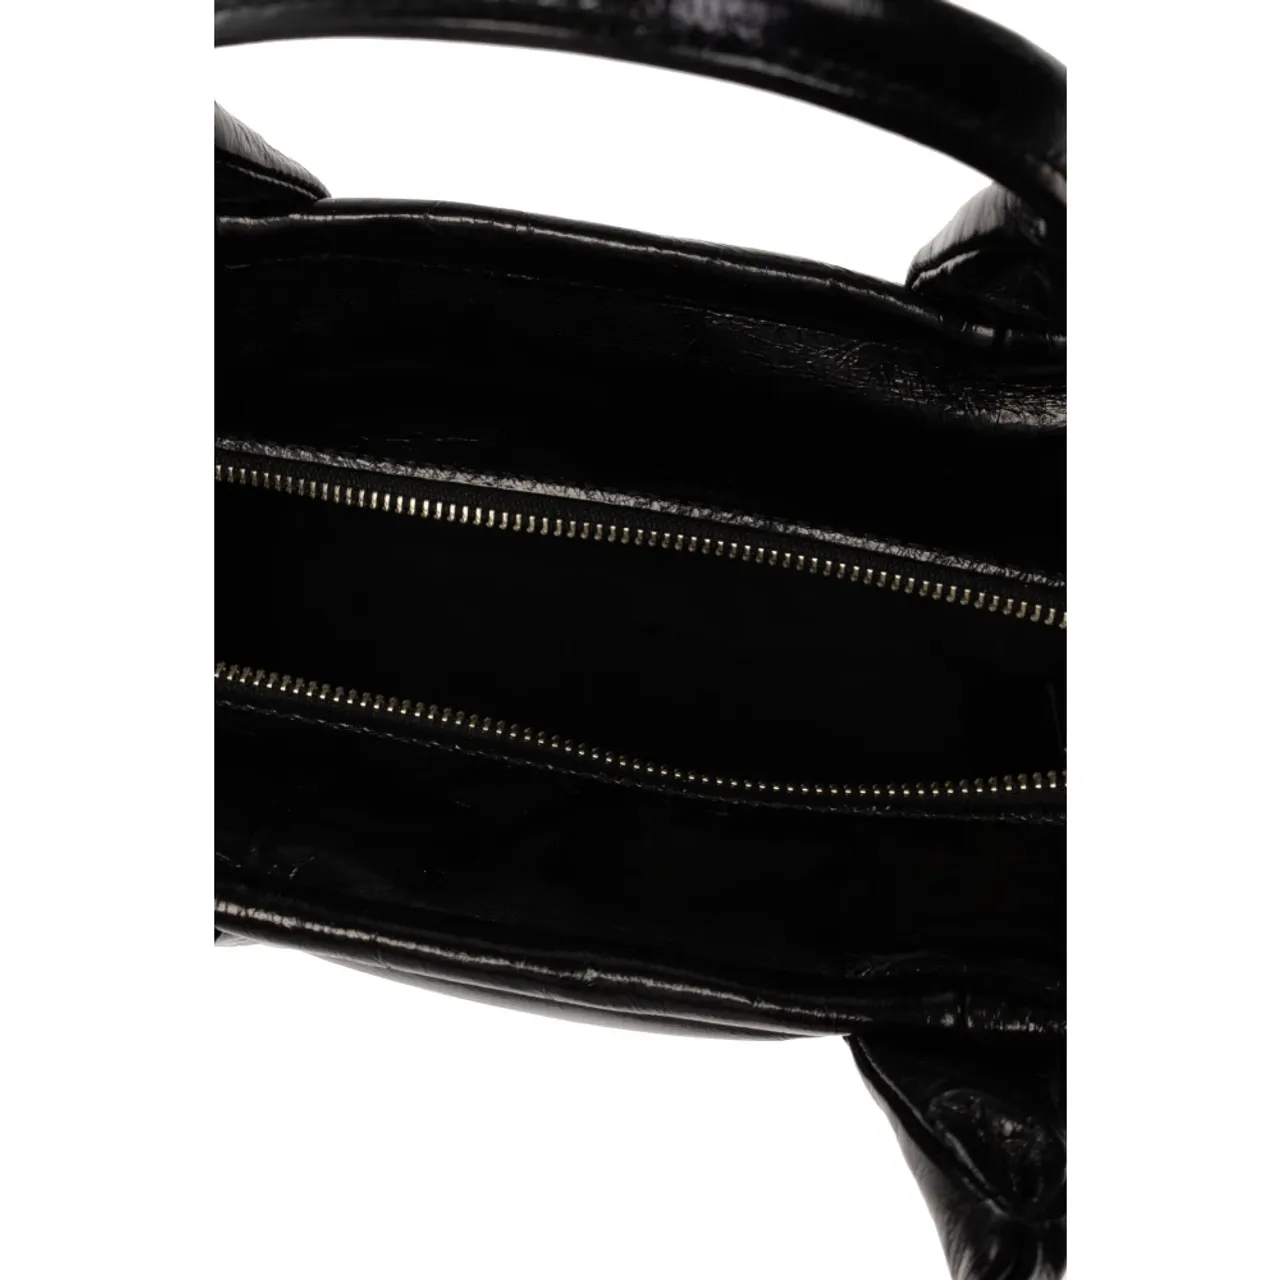 Marc Jacobs , ‘The Tote Mini’ shoulder bag ,Black female, Sizes: ONE SIZE